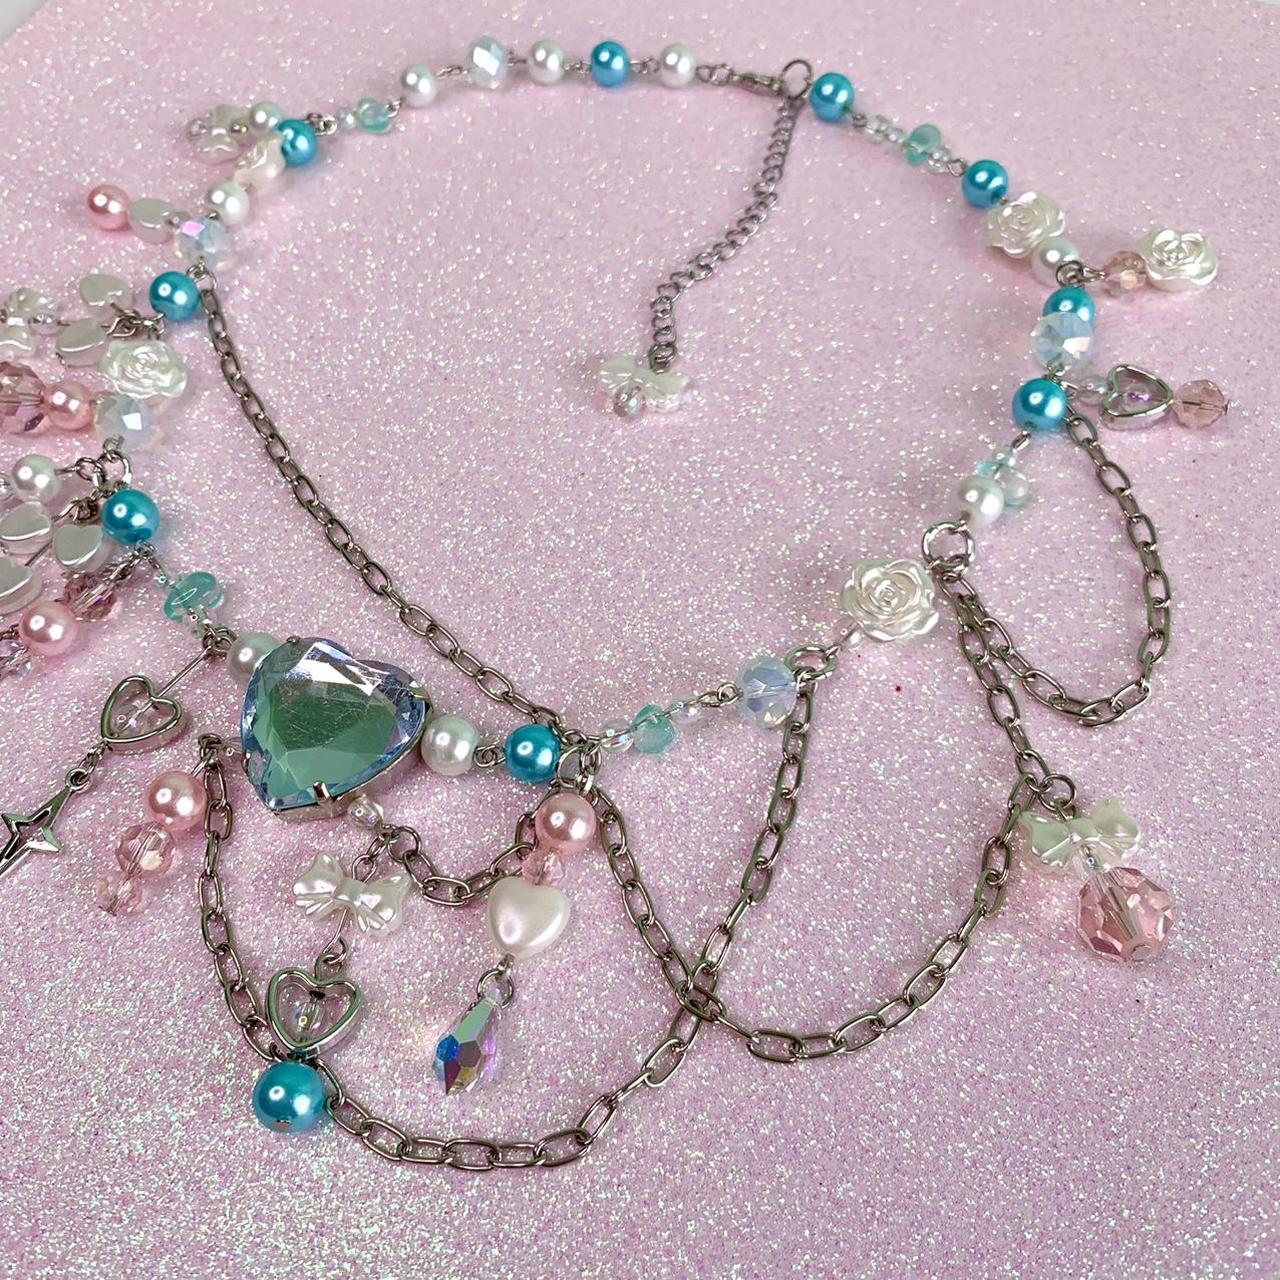 Sugarpill Women's Pink and Blue Jewellery (4)